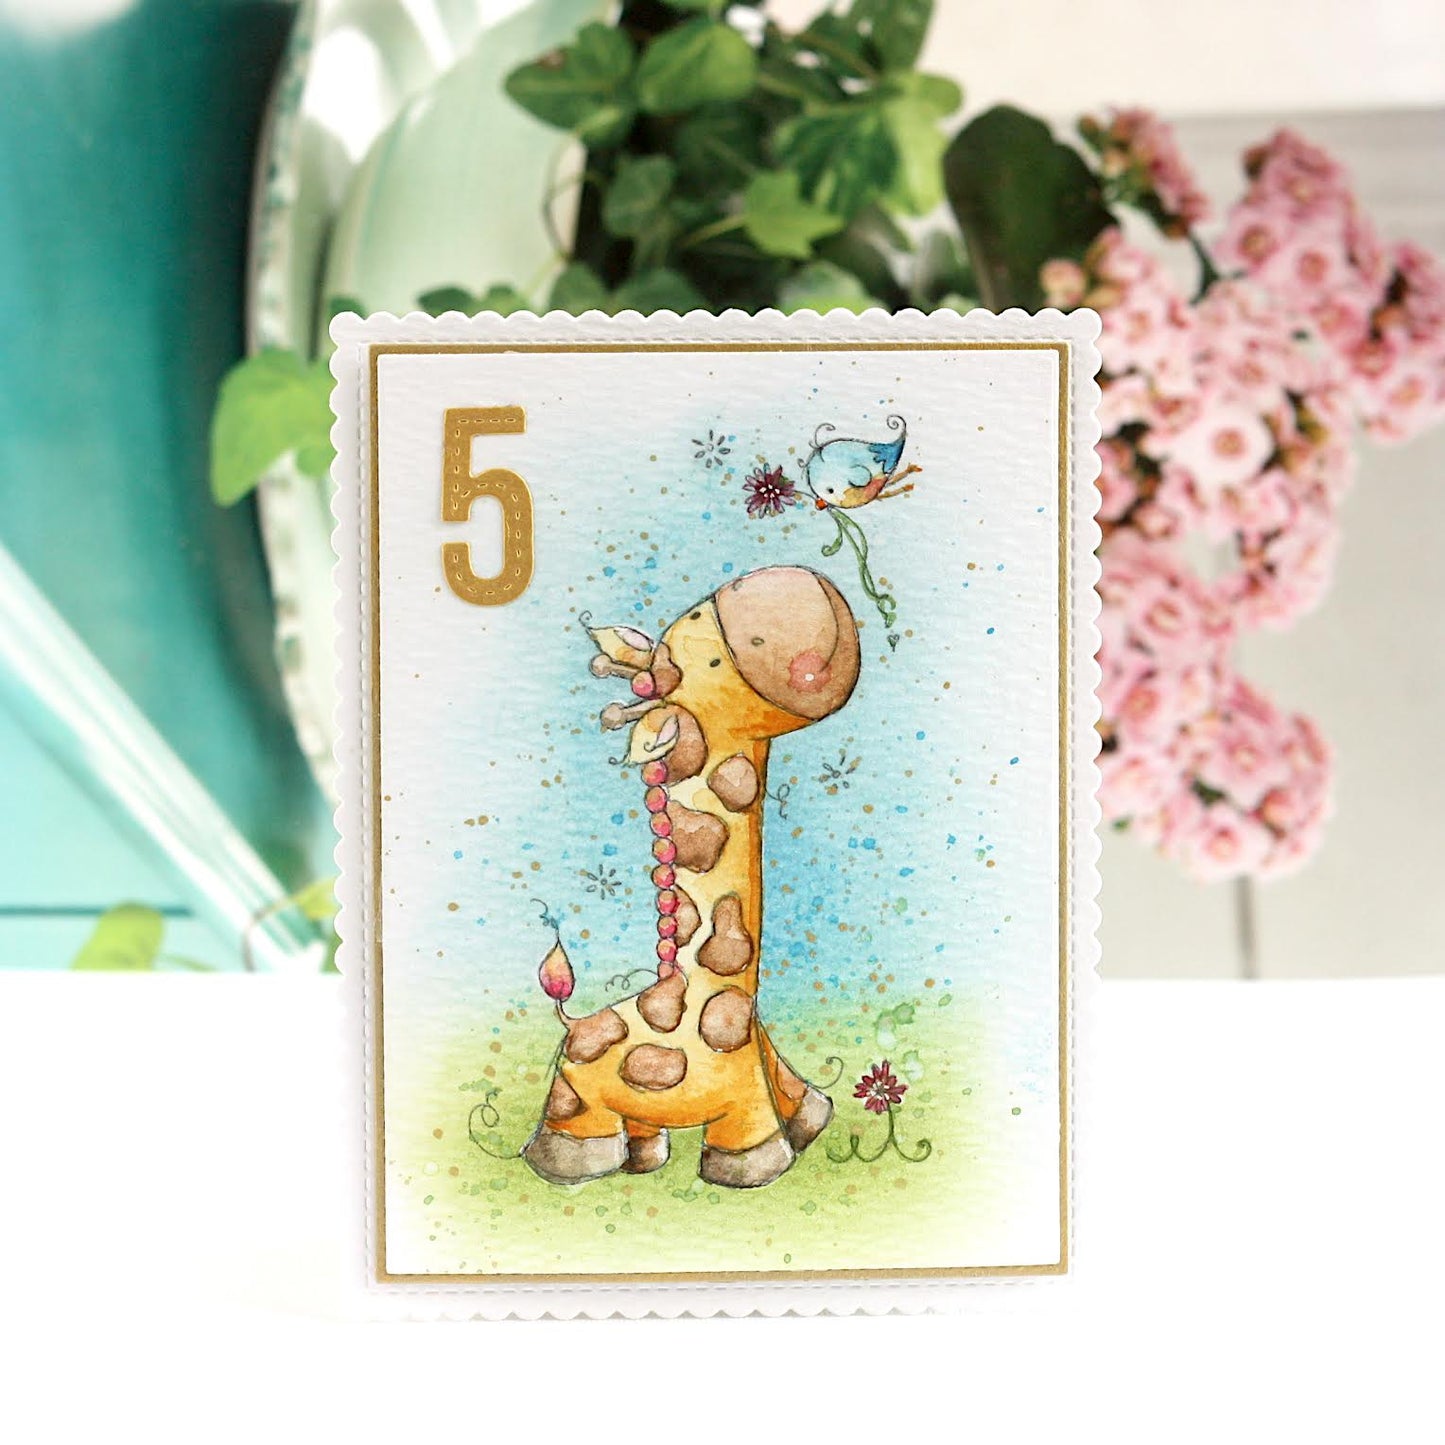 'Giraffe & Bird' Digital Stamp